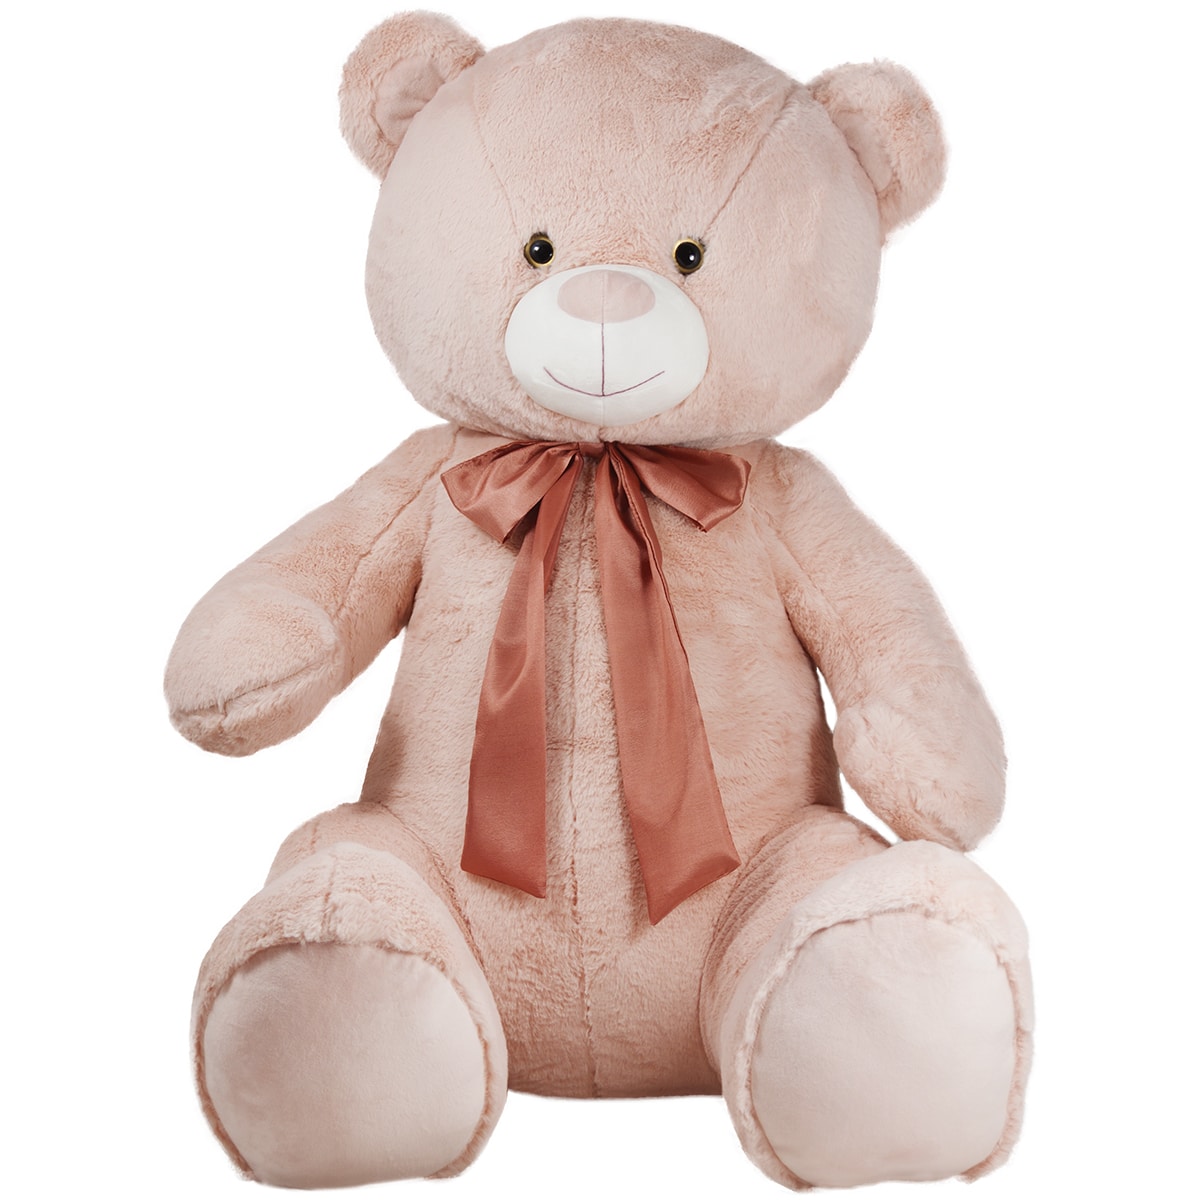 Teddy bear rose gold